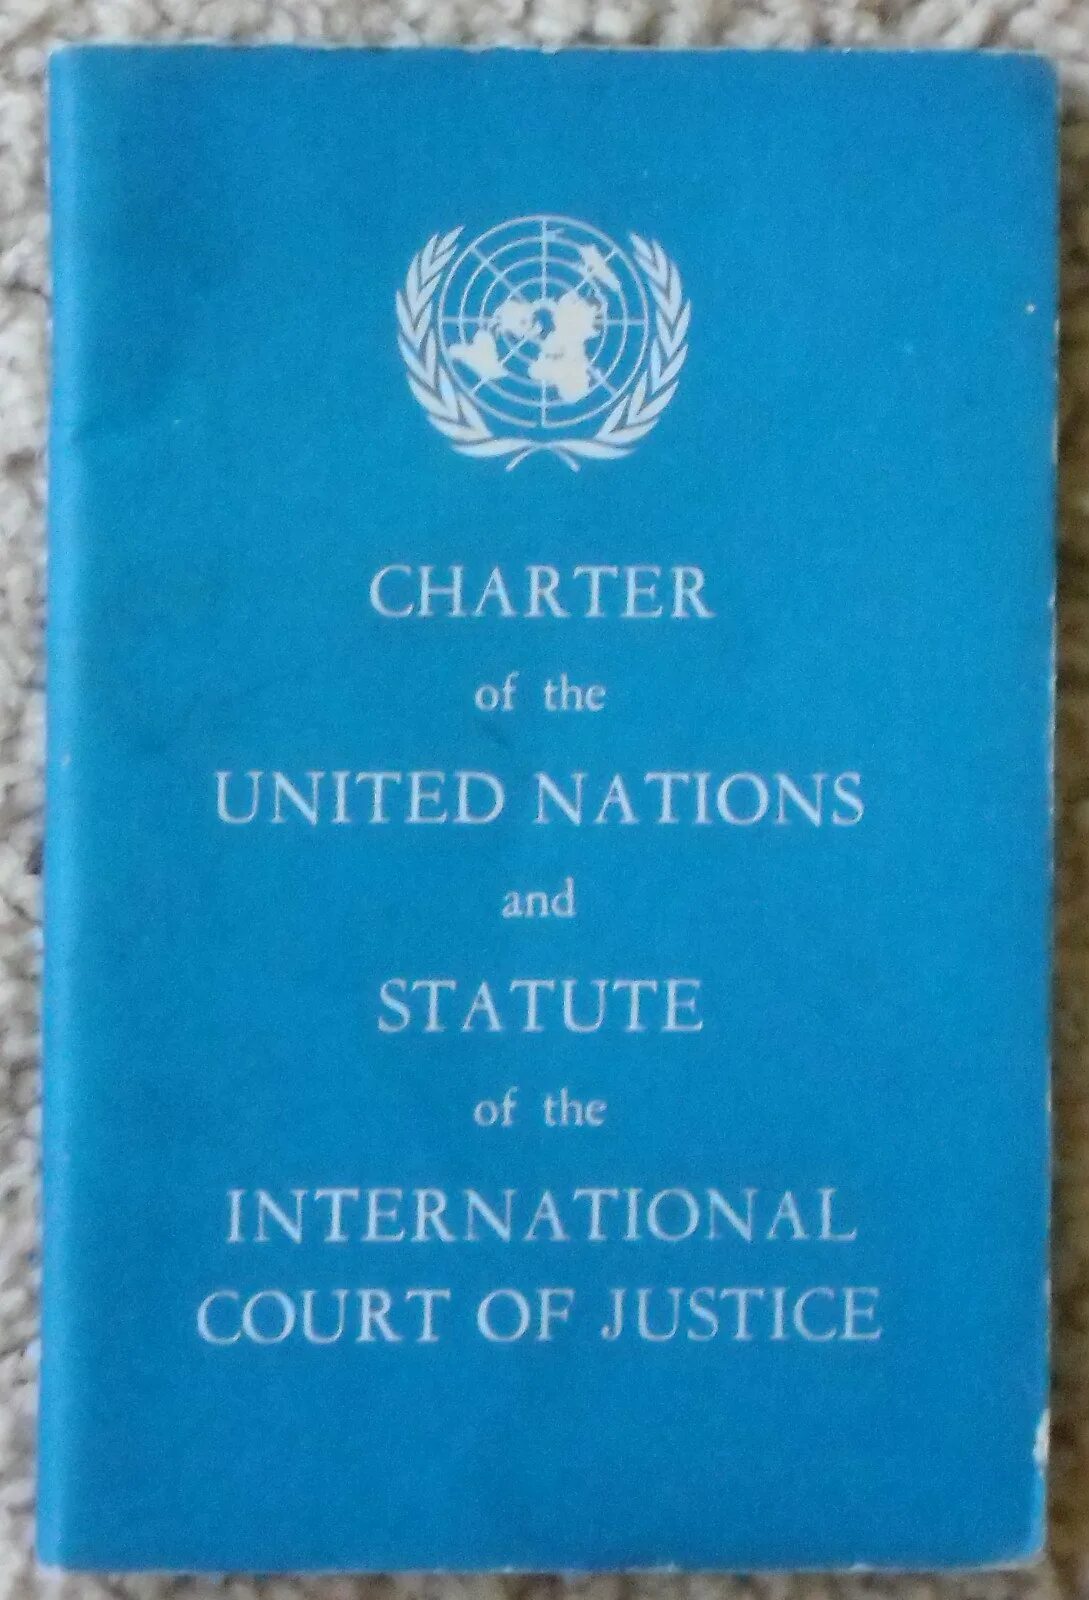 Устав оон 1945. Устав организации Объединенных наций 1945 г. Устав ООН книга. Статут международного суда ООН. Устав международного суда ООН.